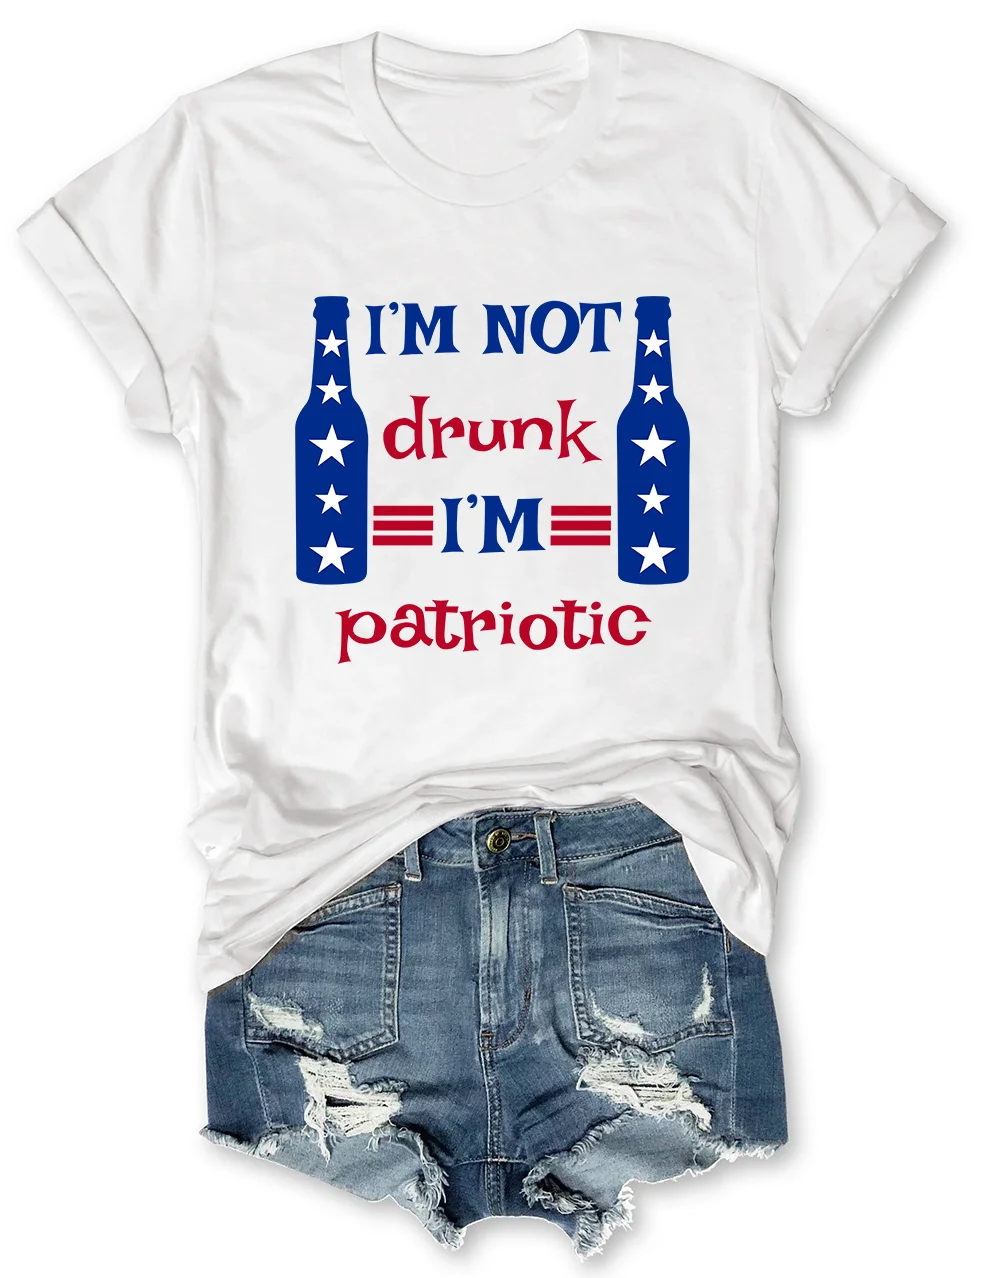 I'm Not Drunk I'm Patriotic 4th of July T-Shirt